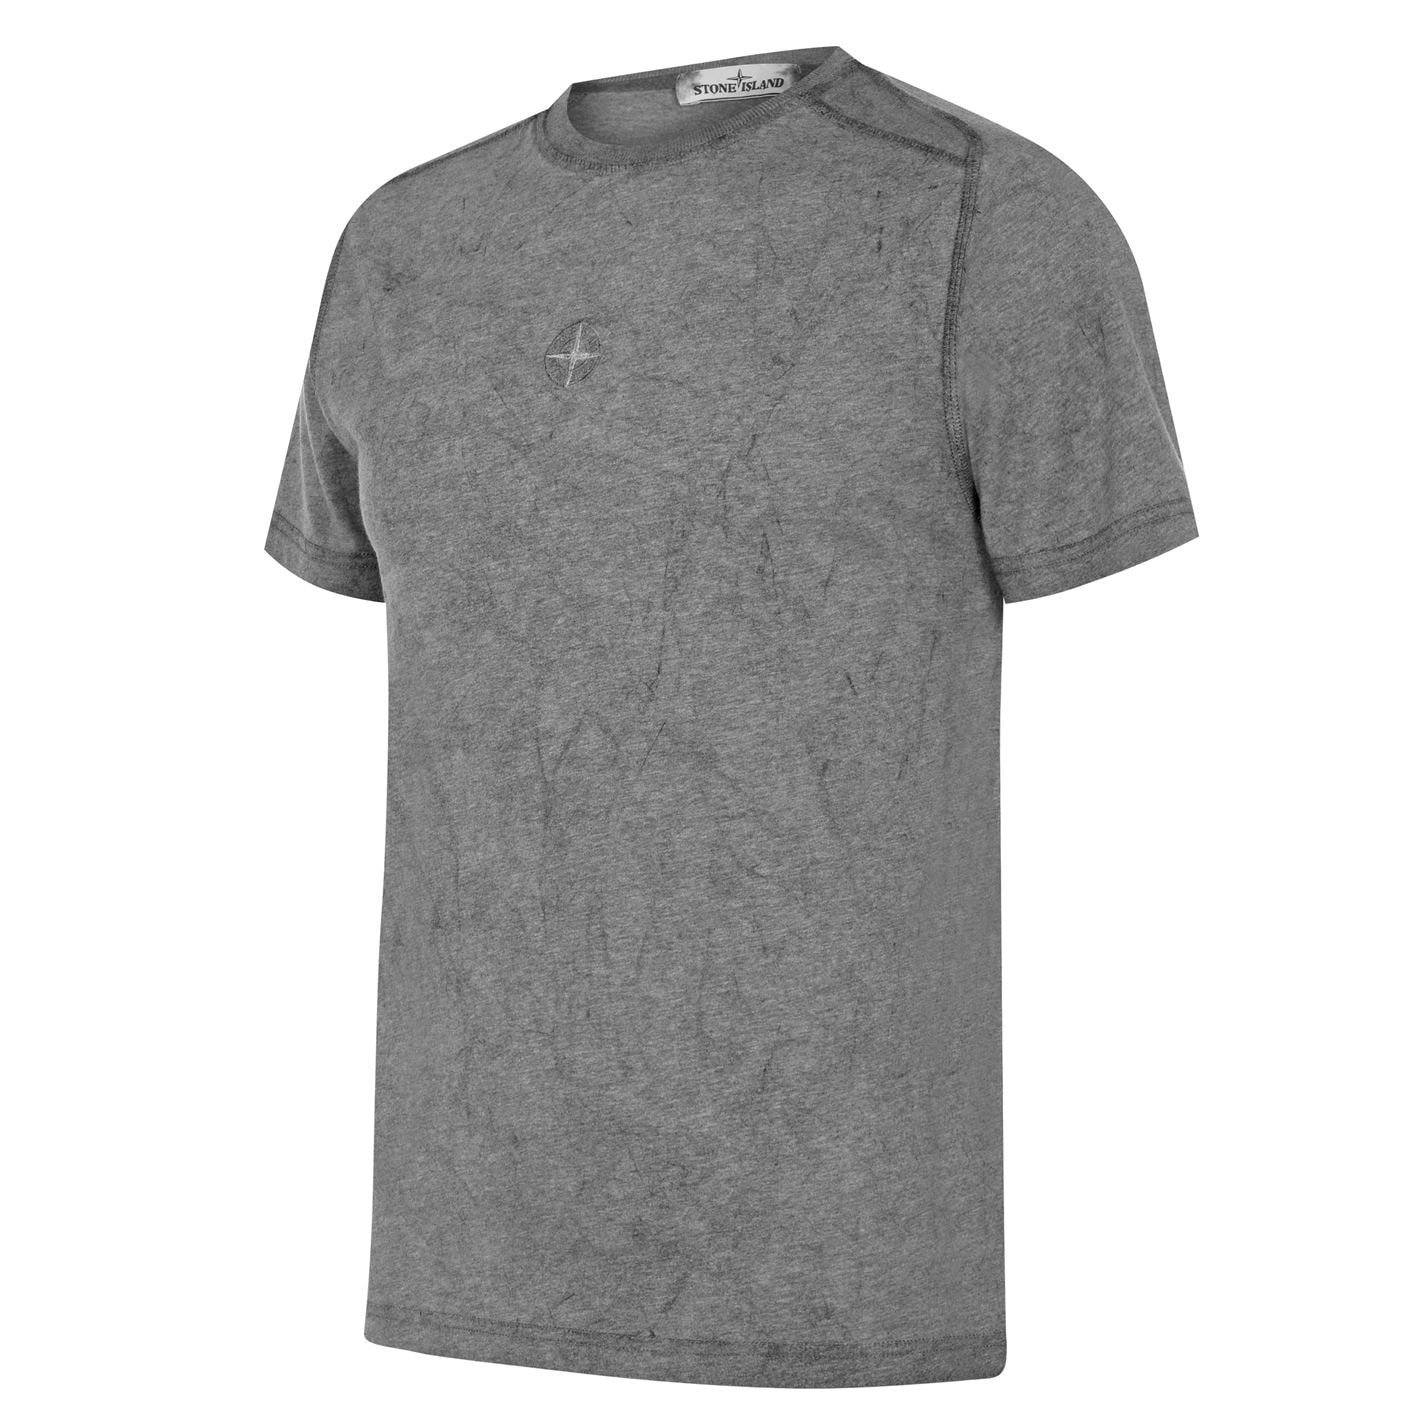 Stone Island Grey Dust T-Shirt T-Shirt Stone Island 